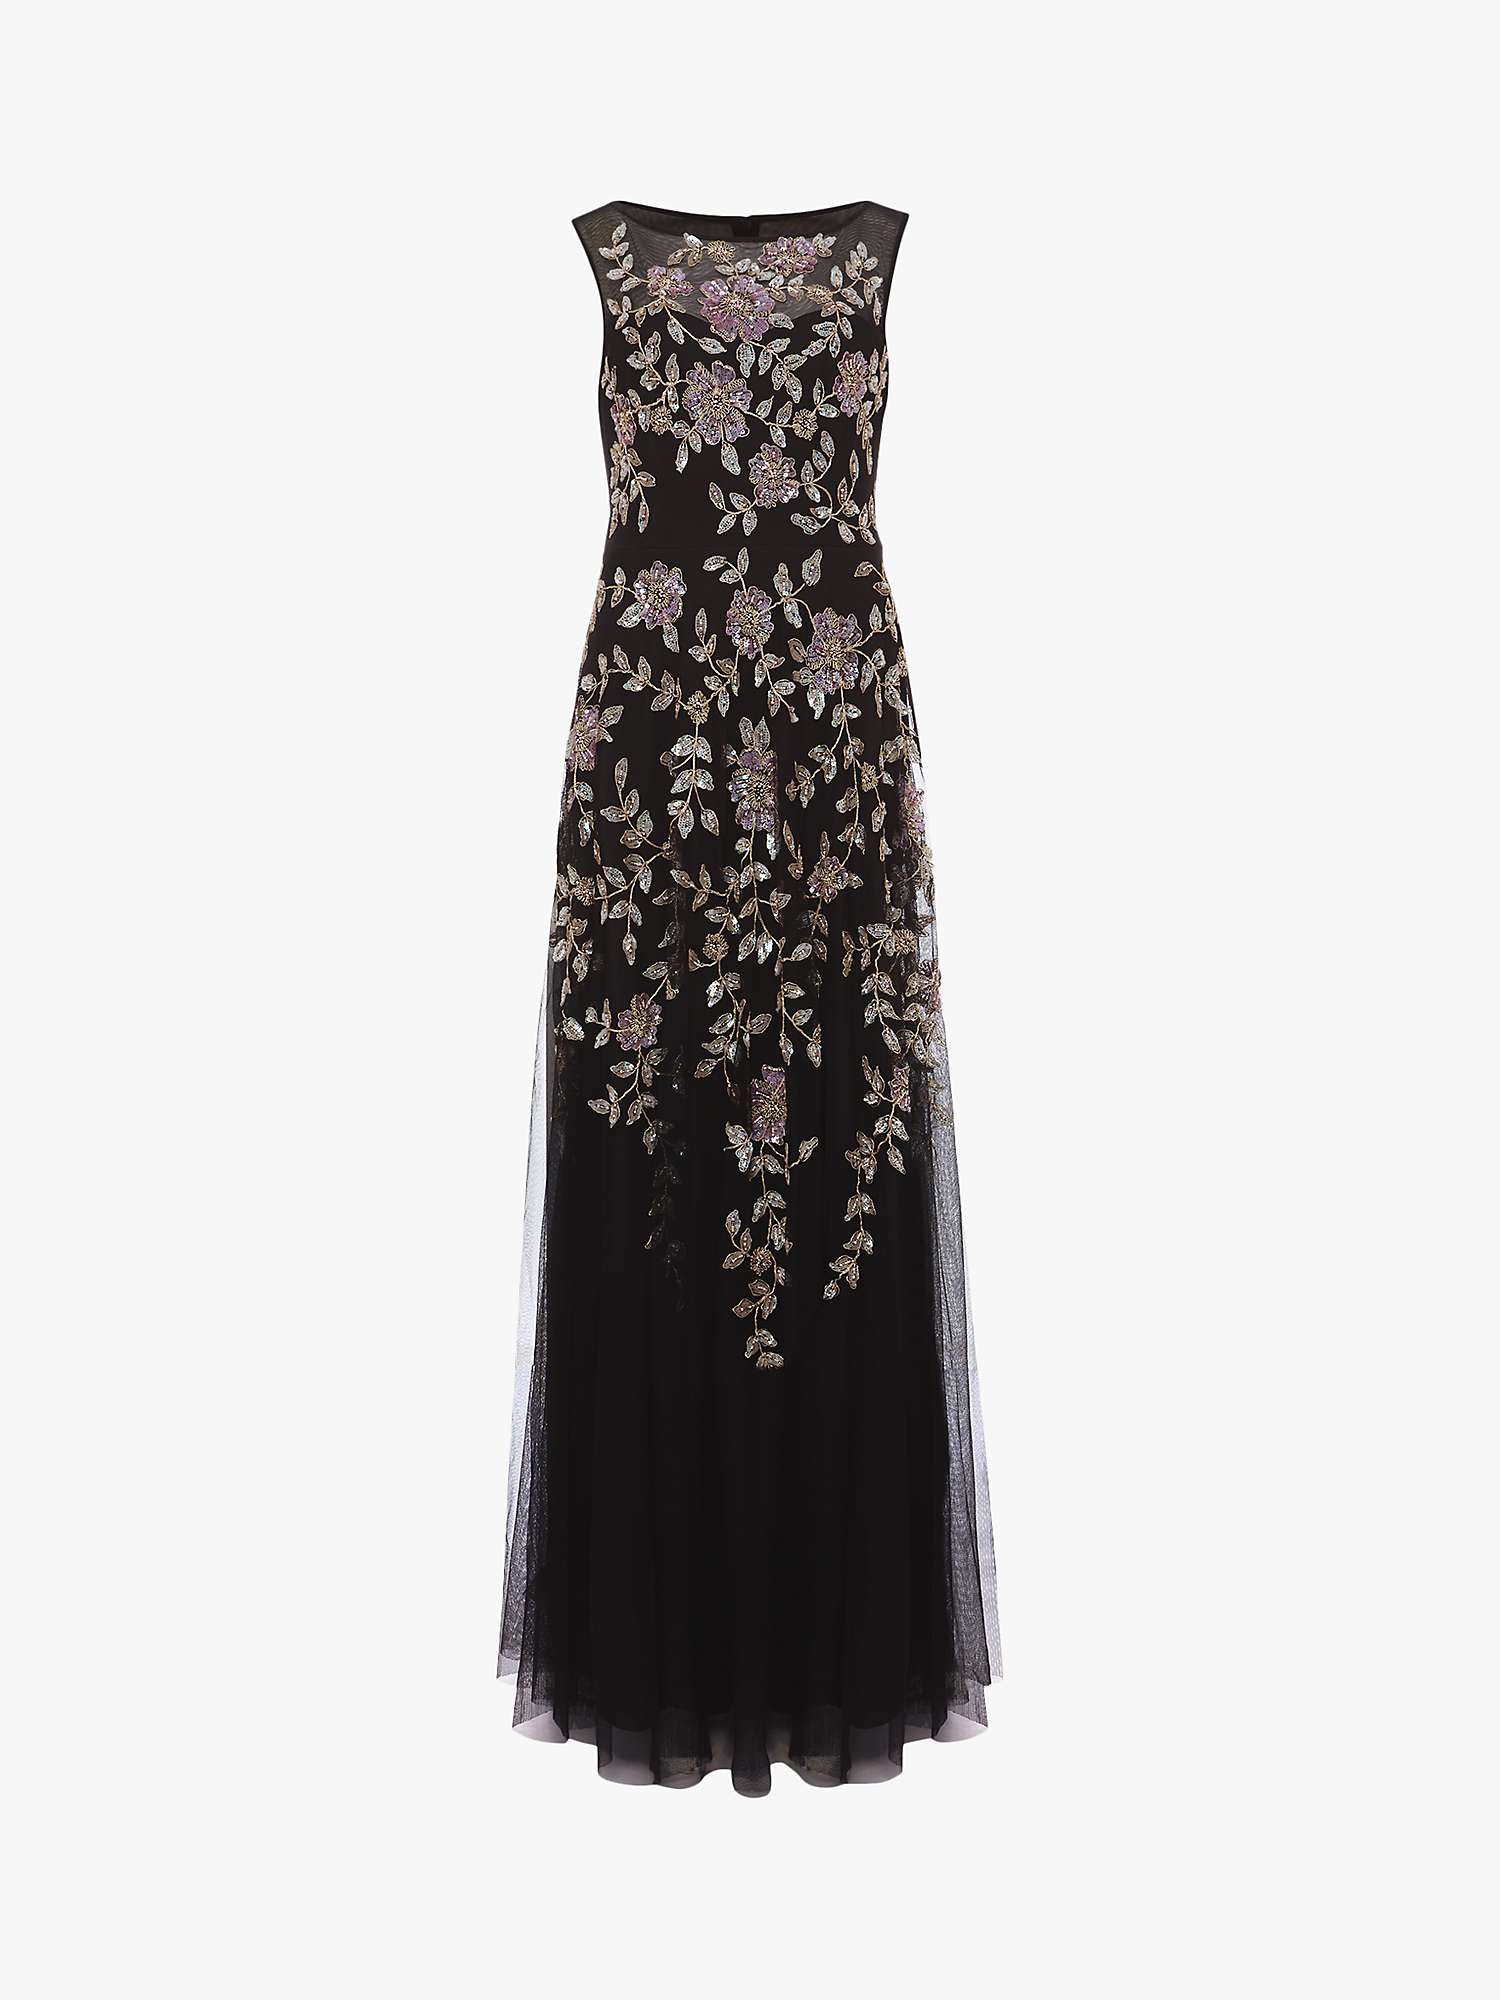 Buy Phase Eight Collection 8 Jacqueline Floral Embellished Dress, Black/Multi Online at johnlewis.com